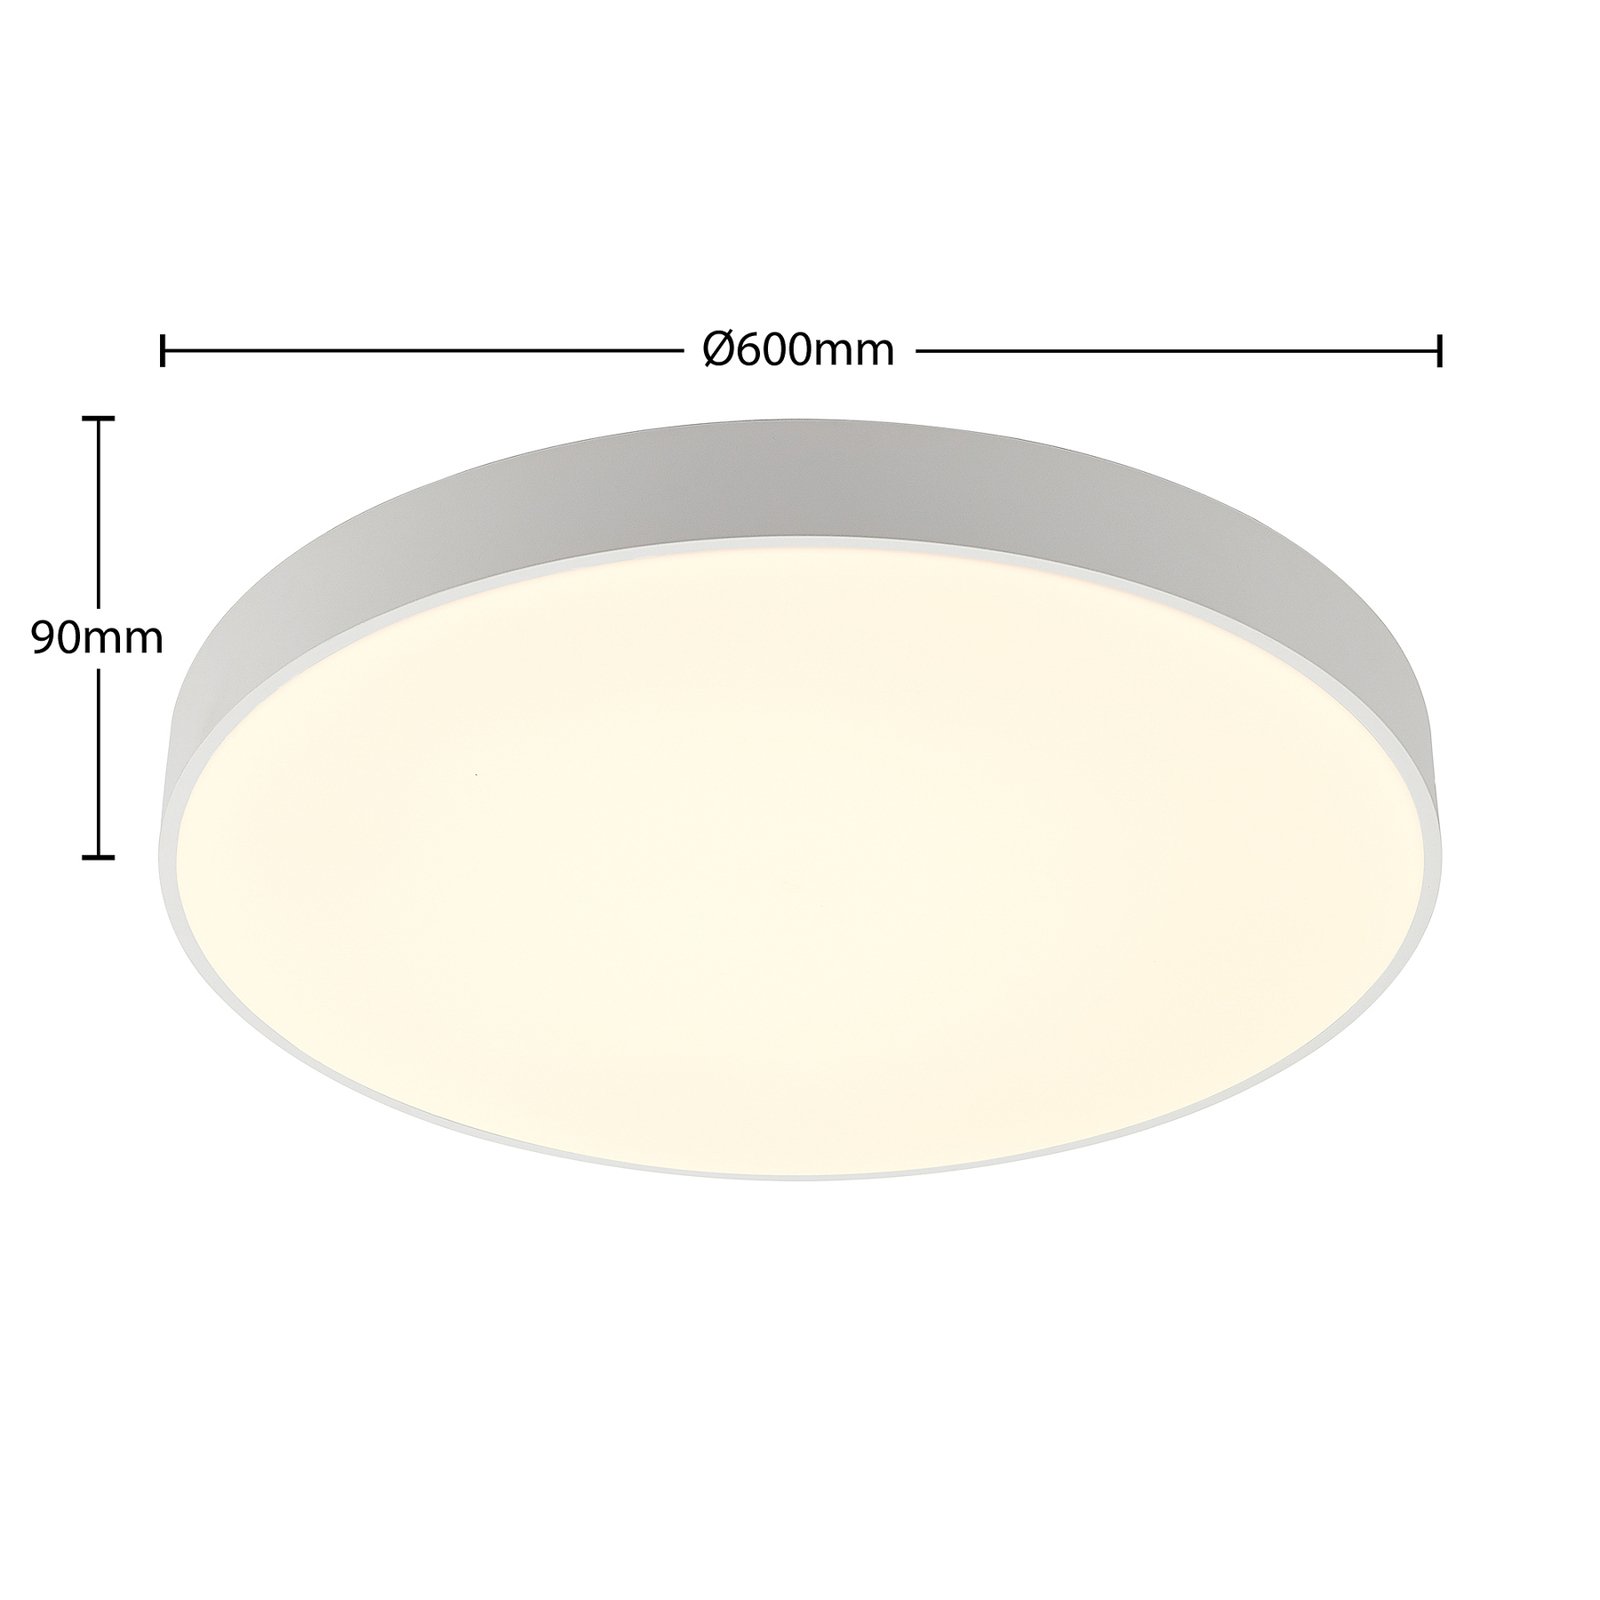 Arcchio Vanida plafonnier LED, blanc, 60 cm